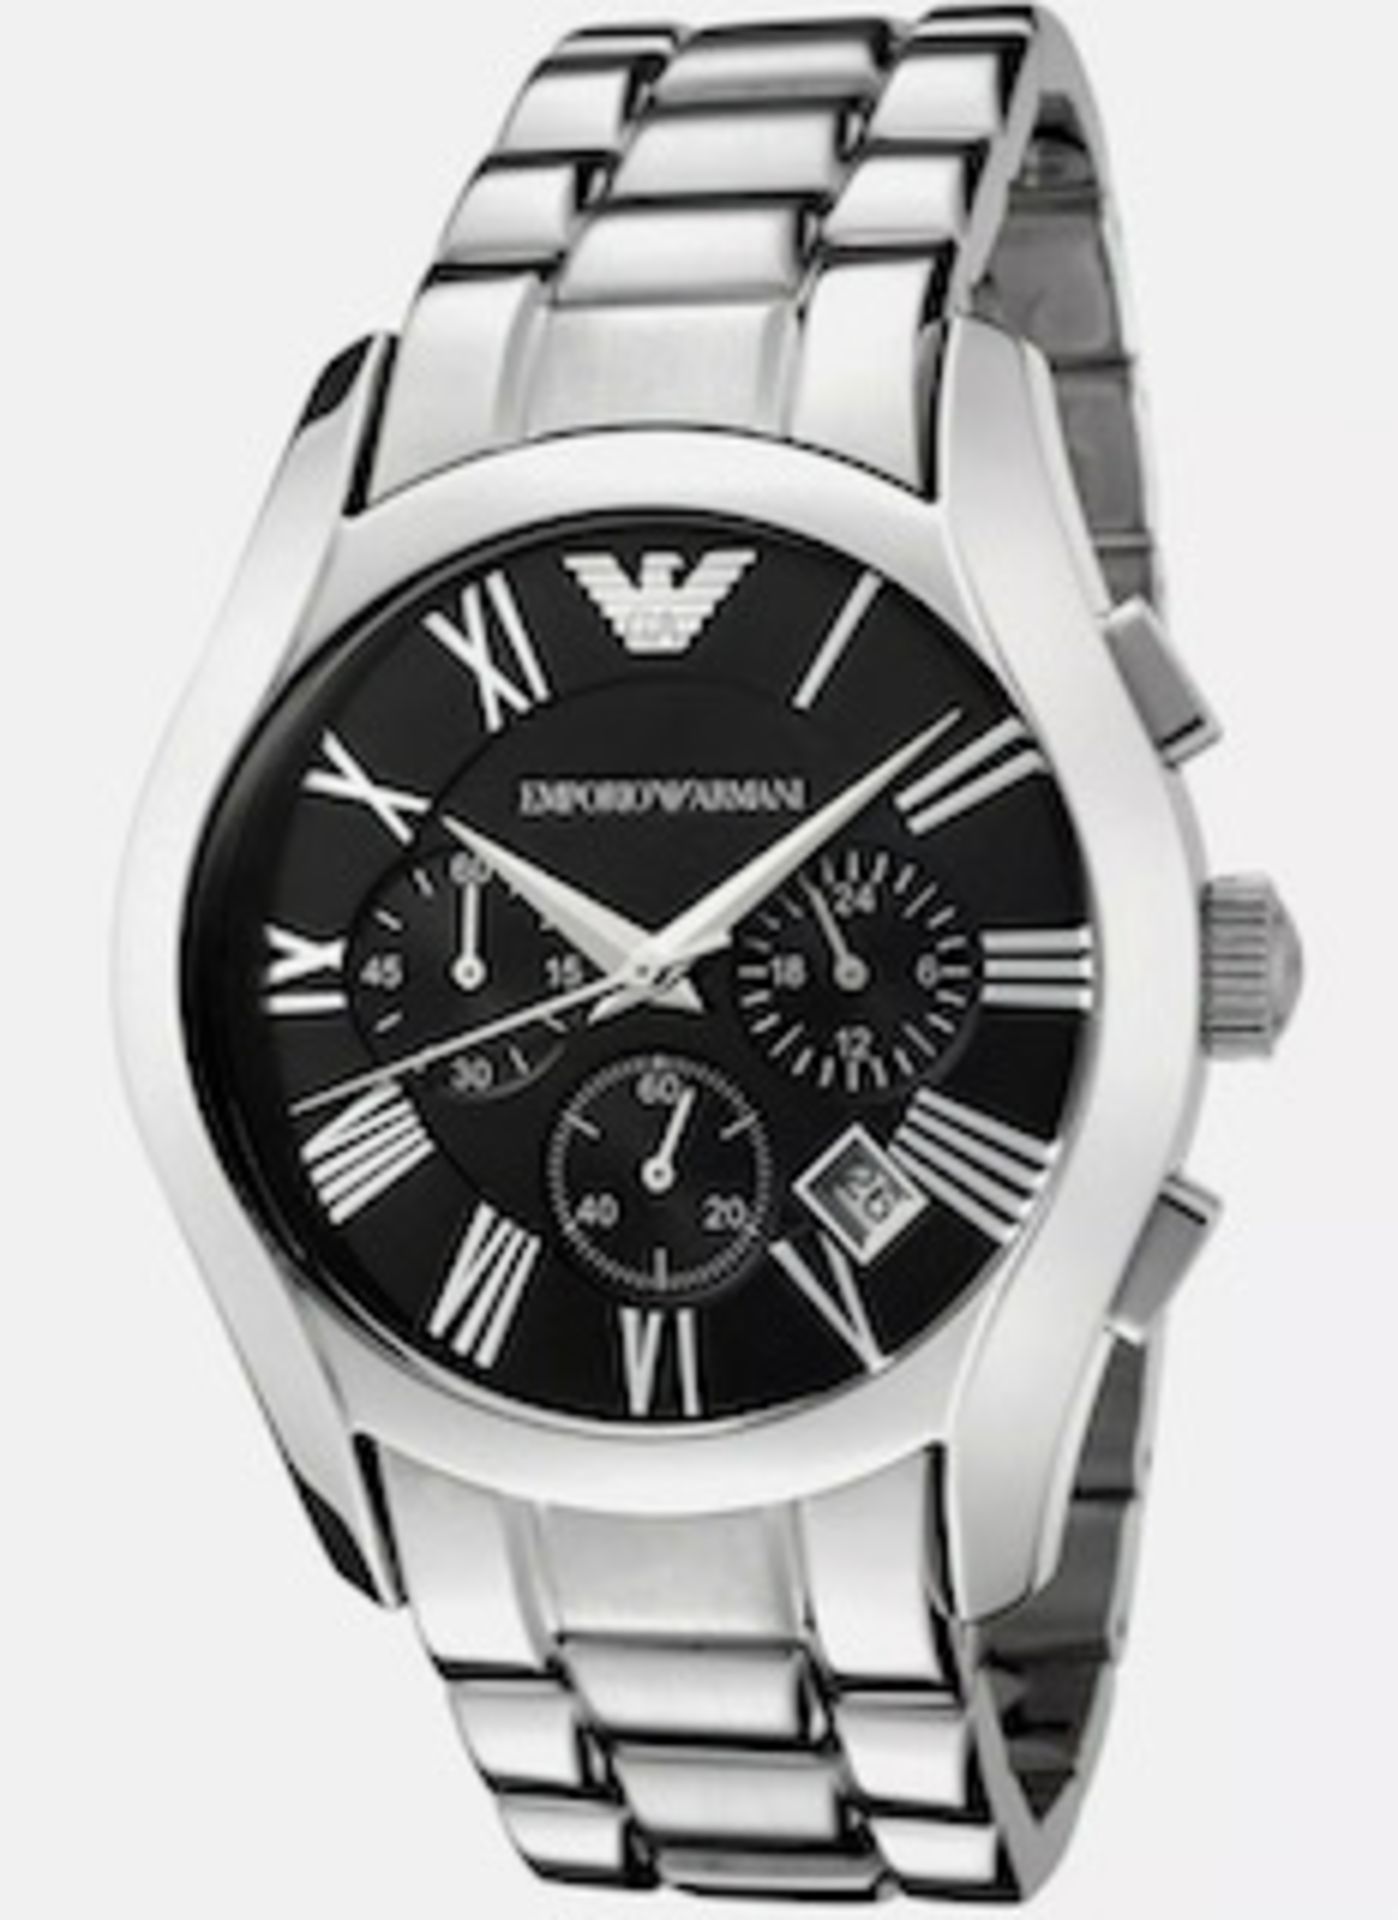 Emporio Armani AR0673 Men's Black Dial Silver Bracelet Quartz Chronograph Watch - Image 2 of 8